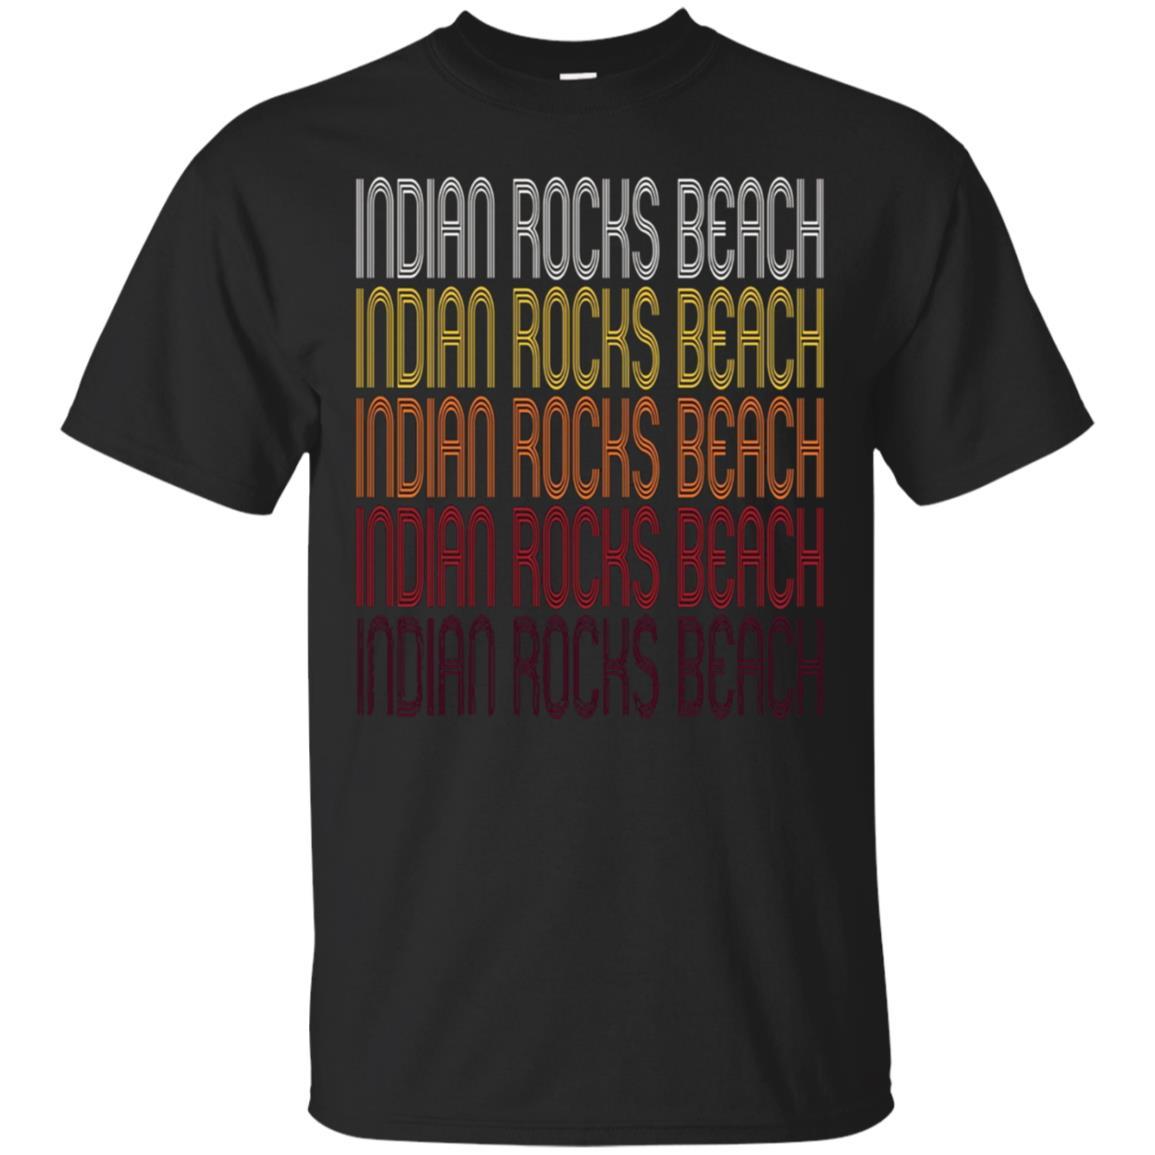  Indian Rocks Beach, Fl | Vintage Style Florida T-shirt